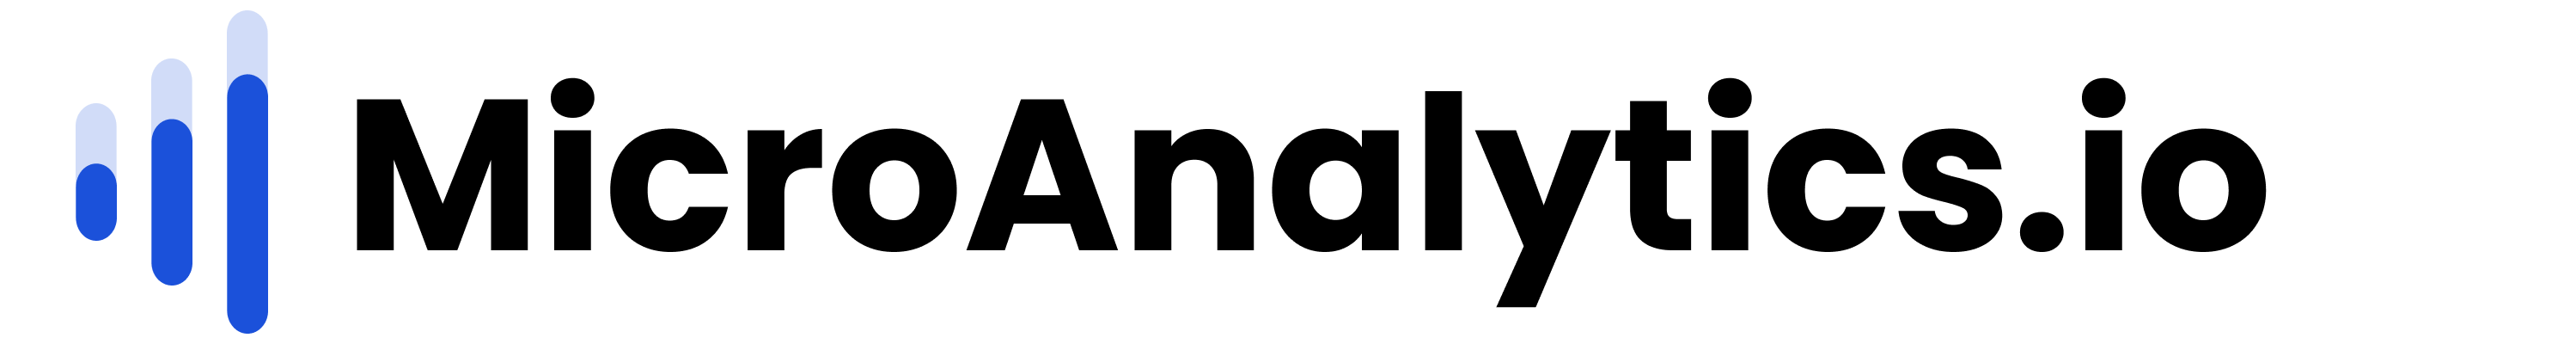 MicroAnalytics.io Logo